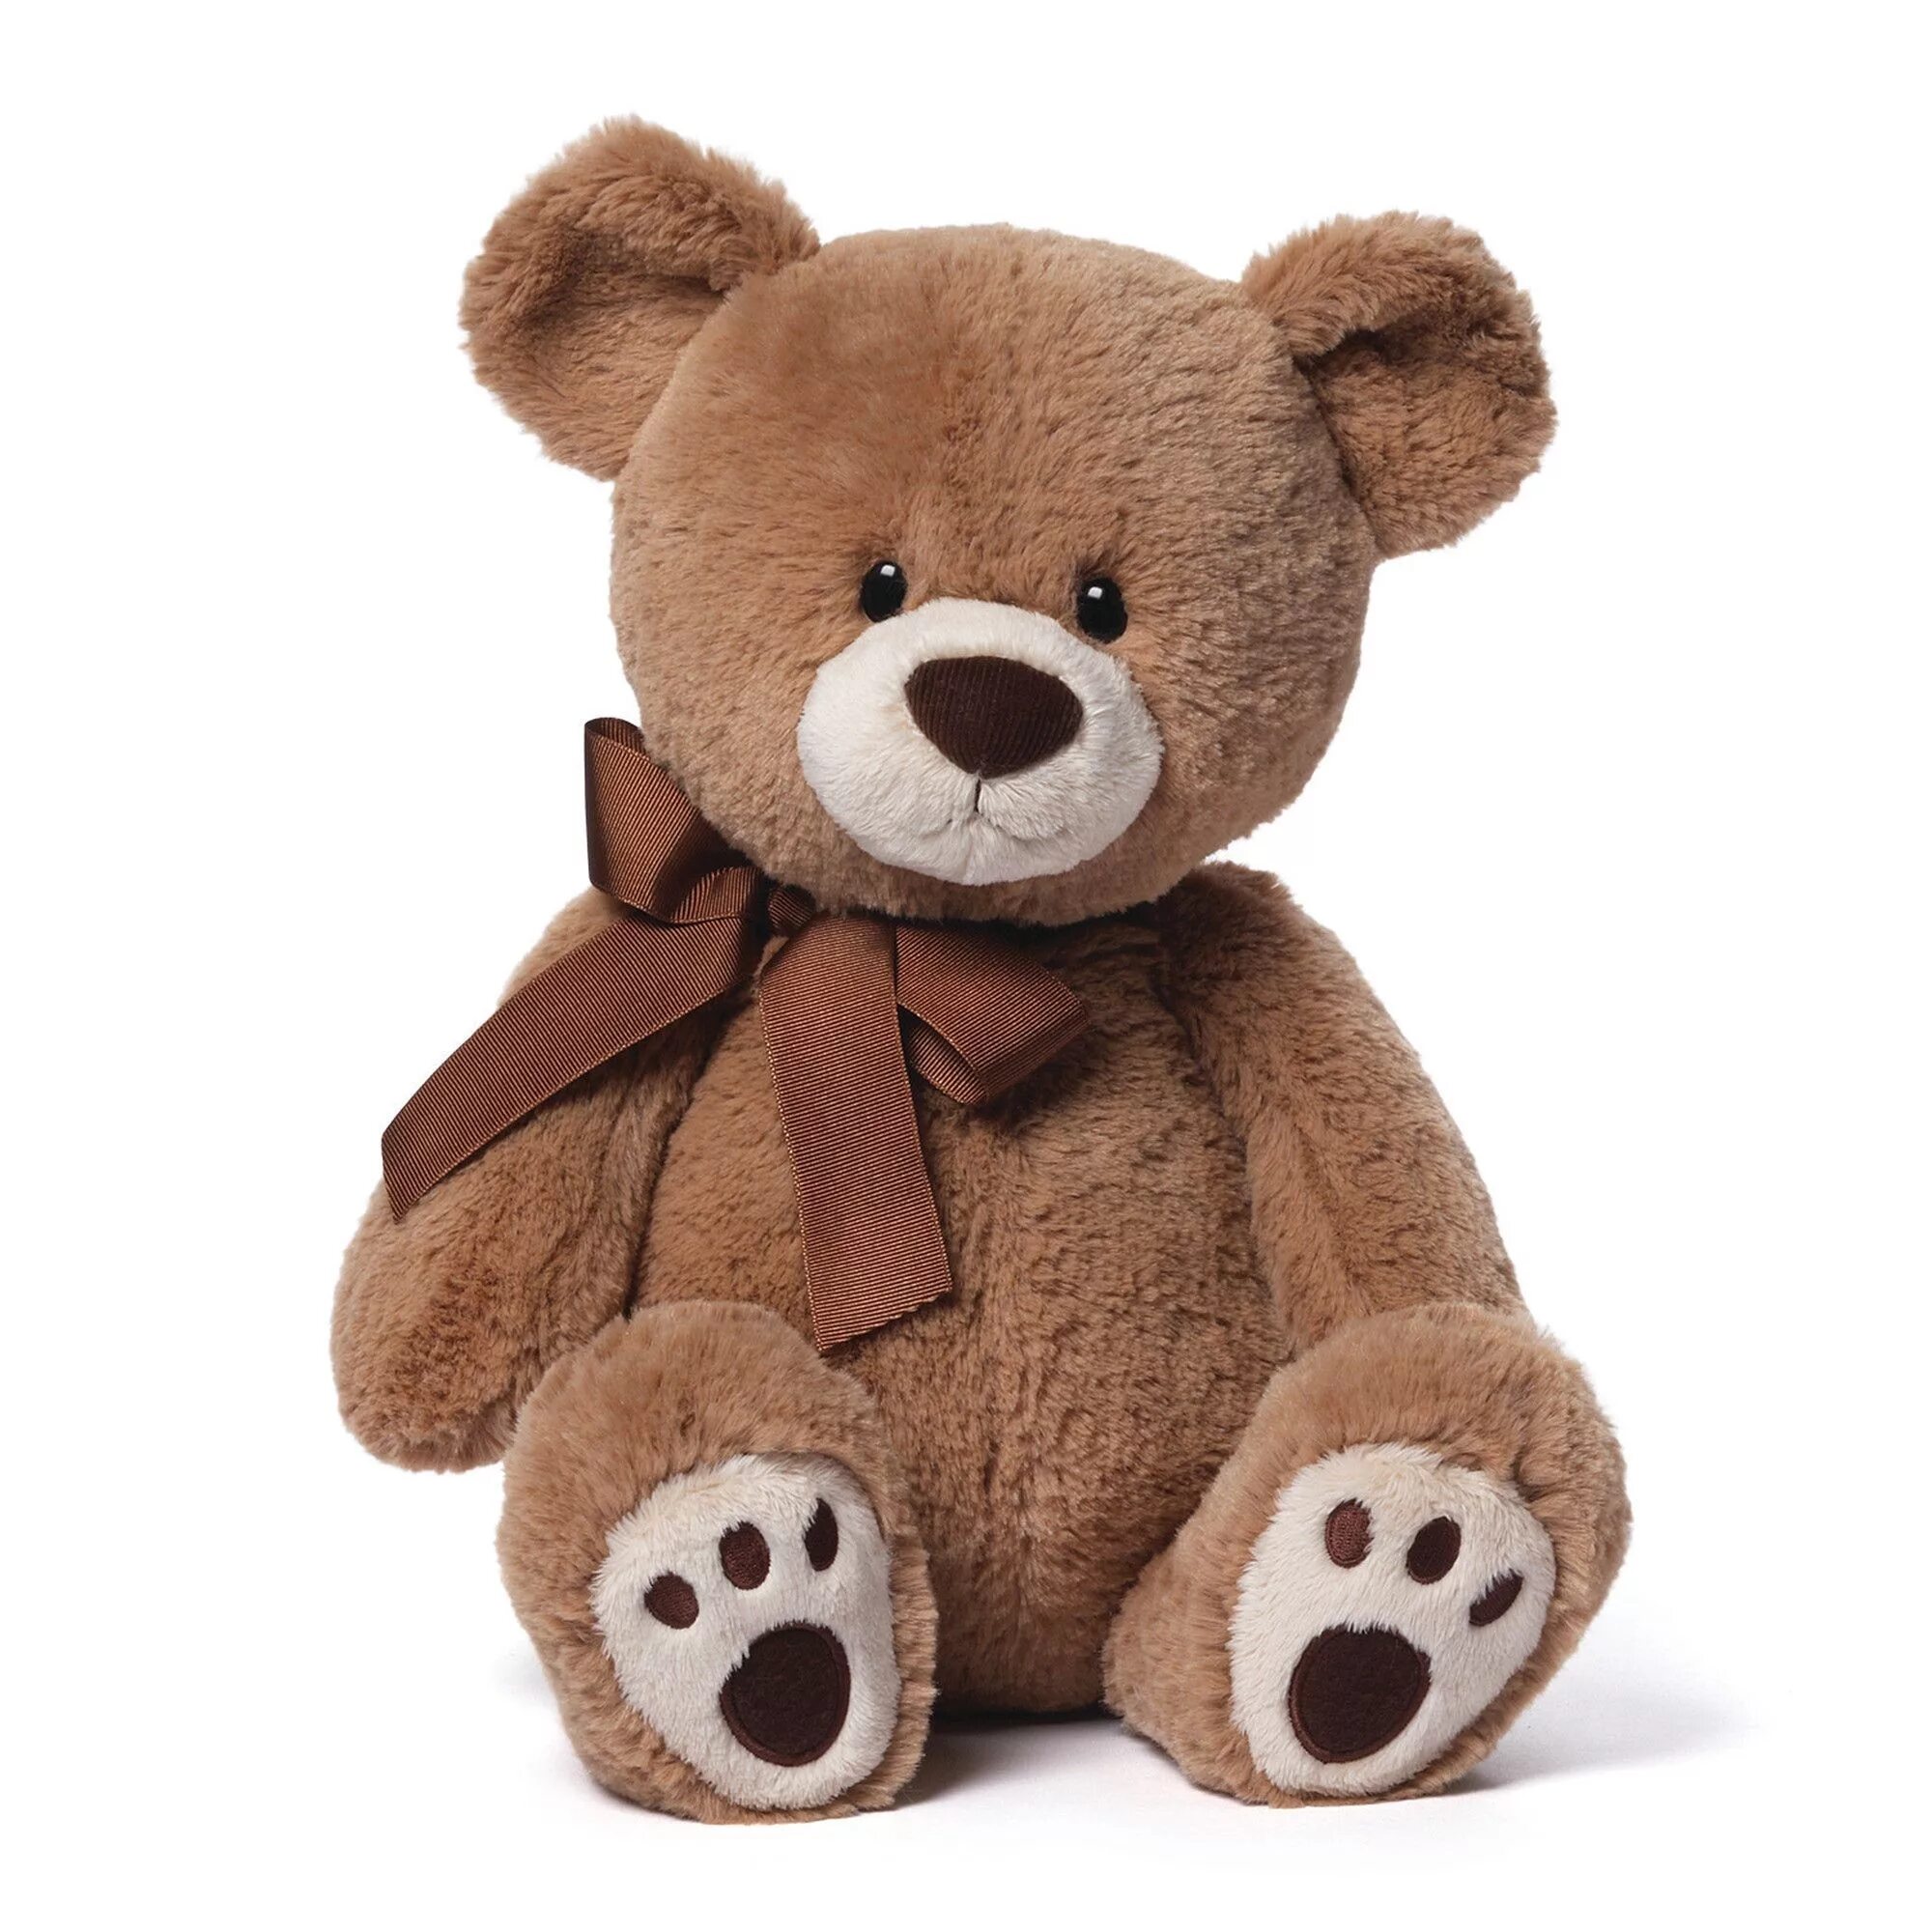 A brown teddy bear. Тедди Беар. Teddy Bear игрушка. Ребенок с плюшевым мишкой. Teddy Soft Toys.